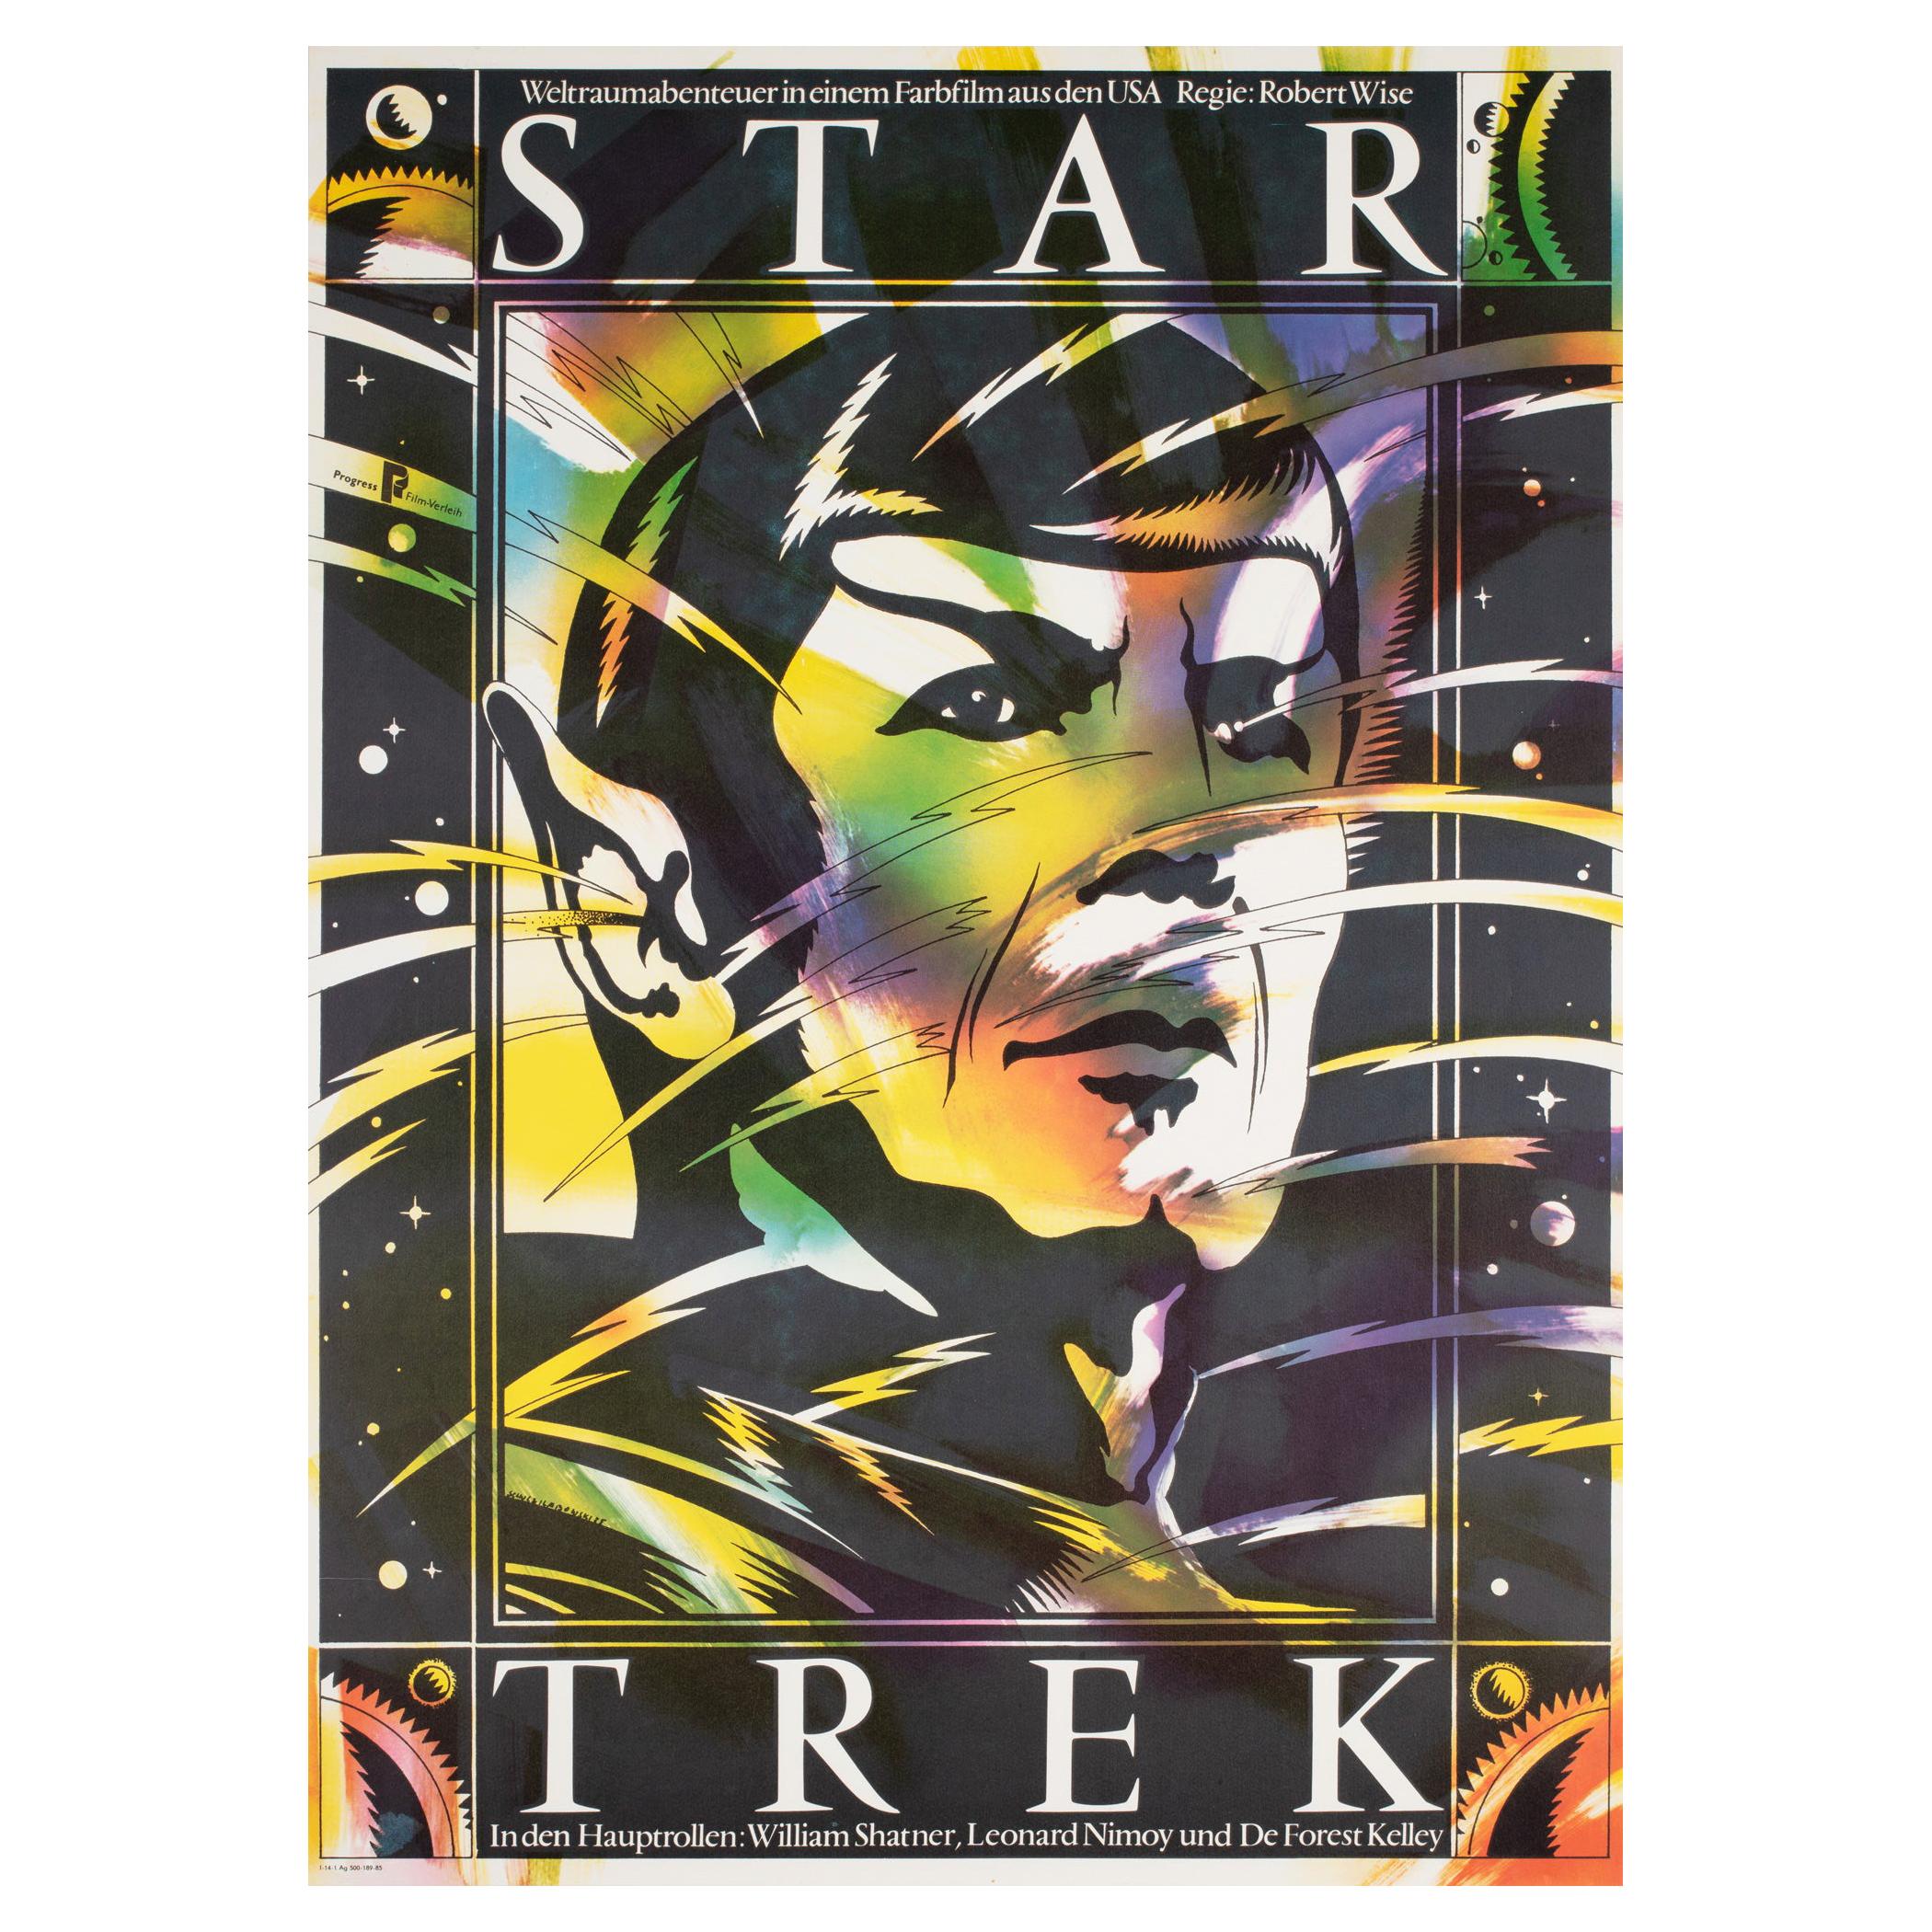 Star Trek Original East German Film Movie Poster, 1985